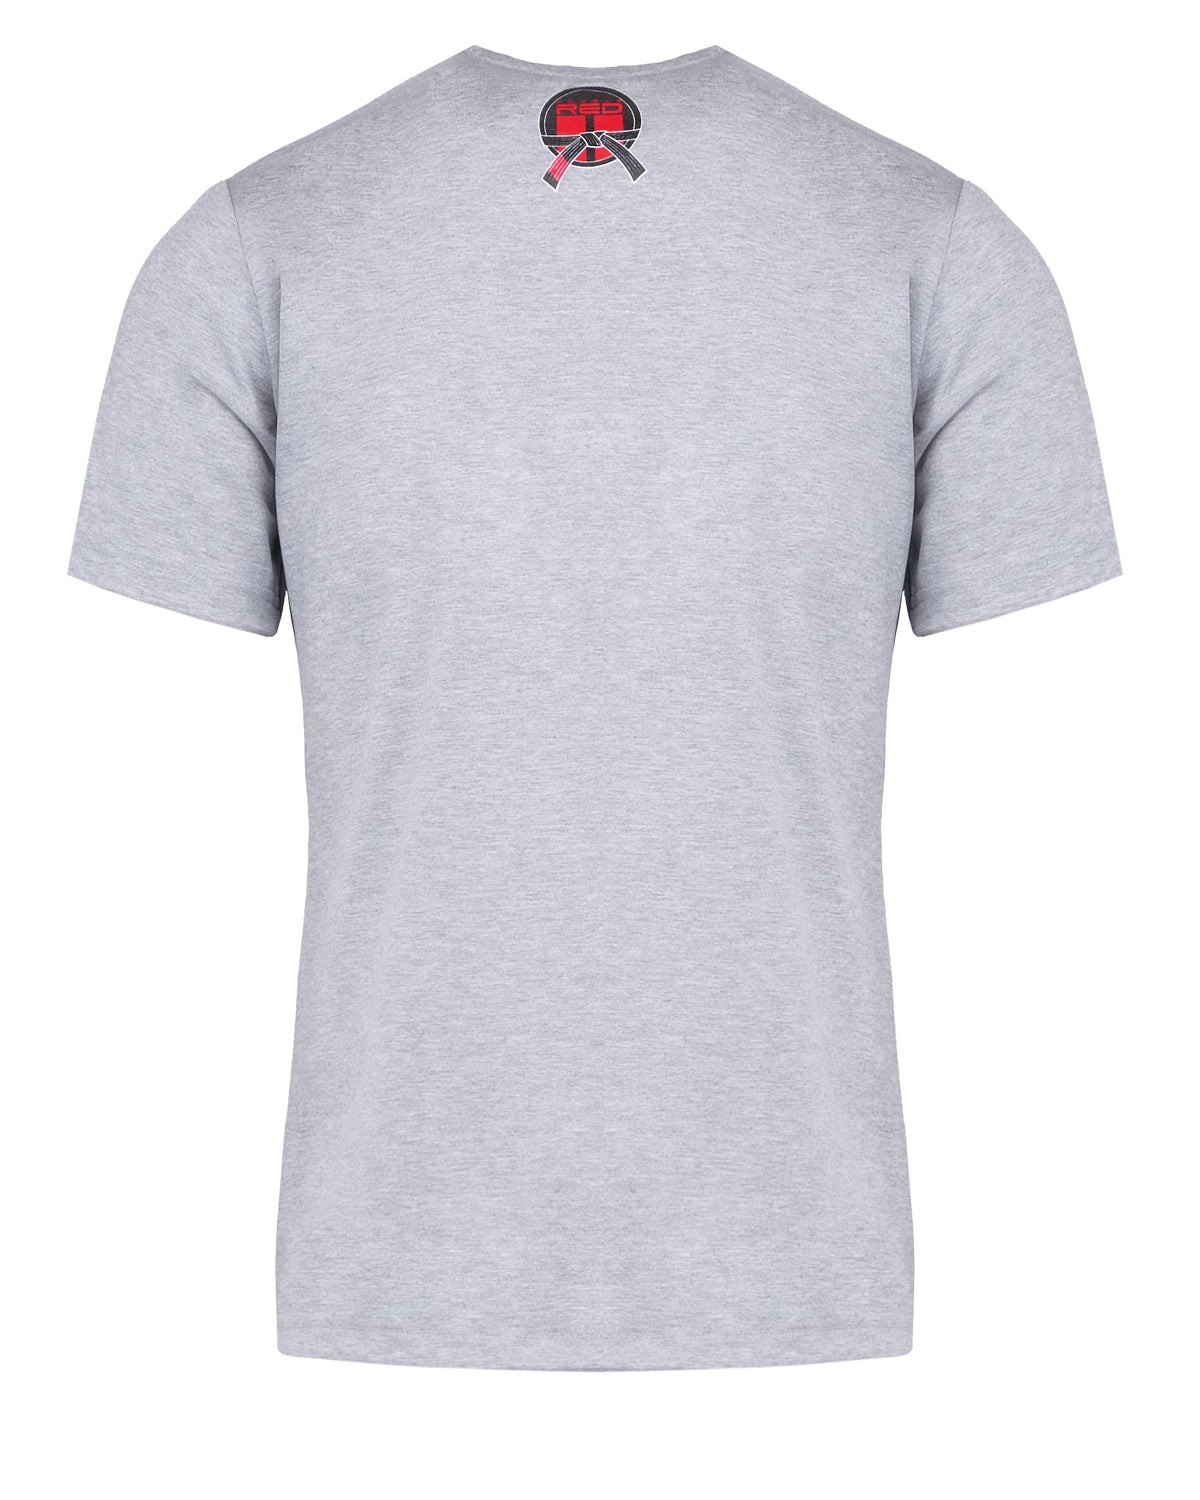 JIU JITSU Black Belt T-shirt Grey